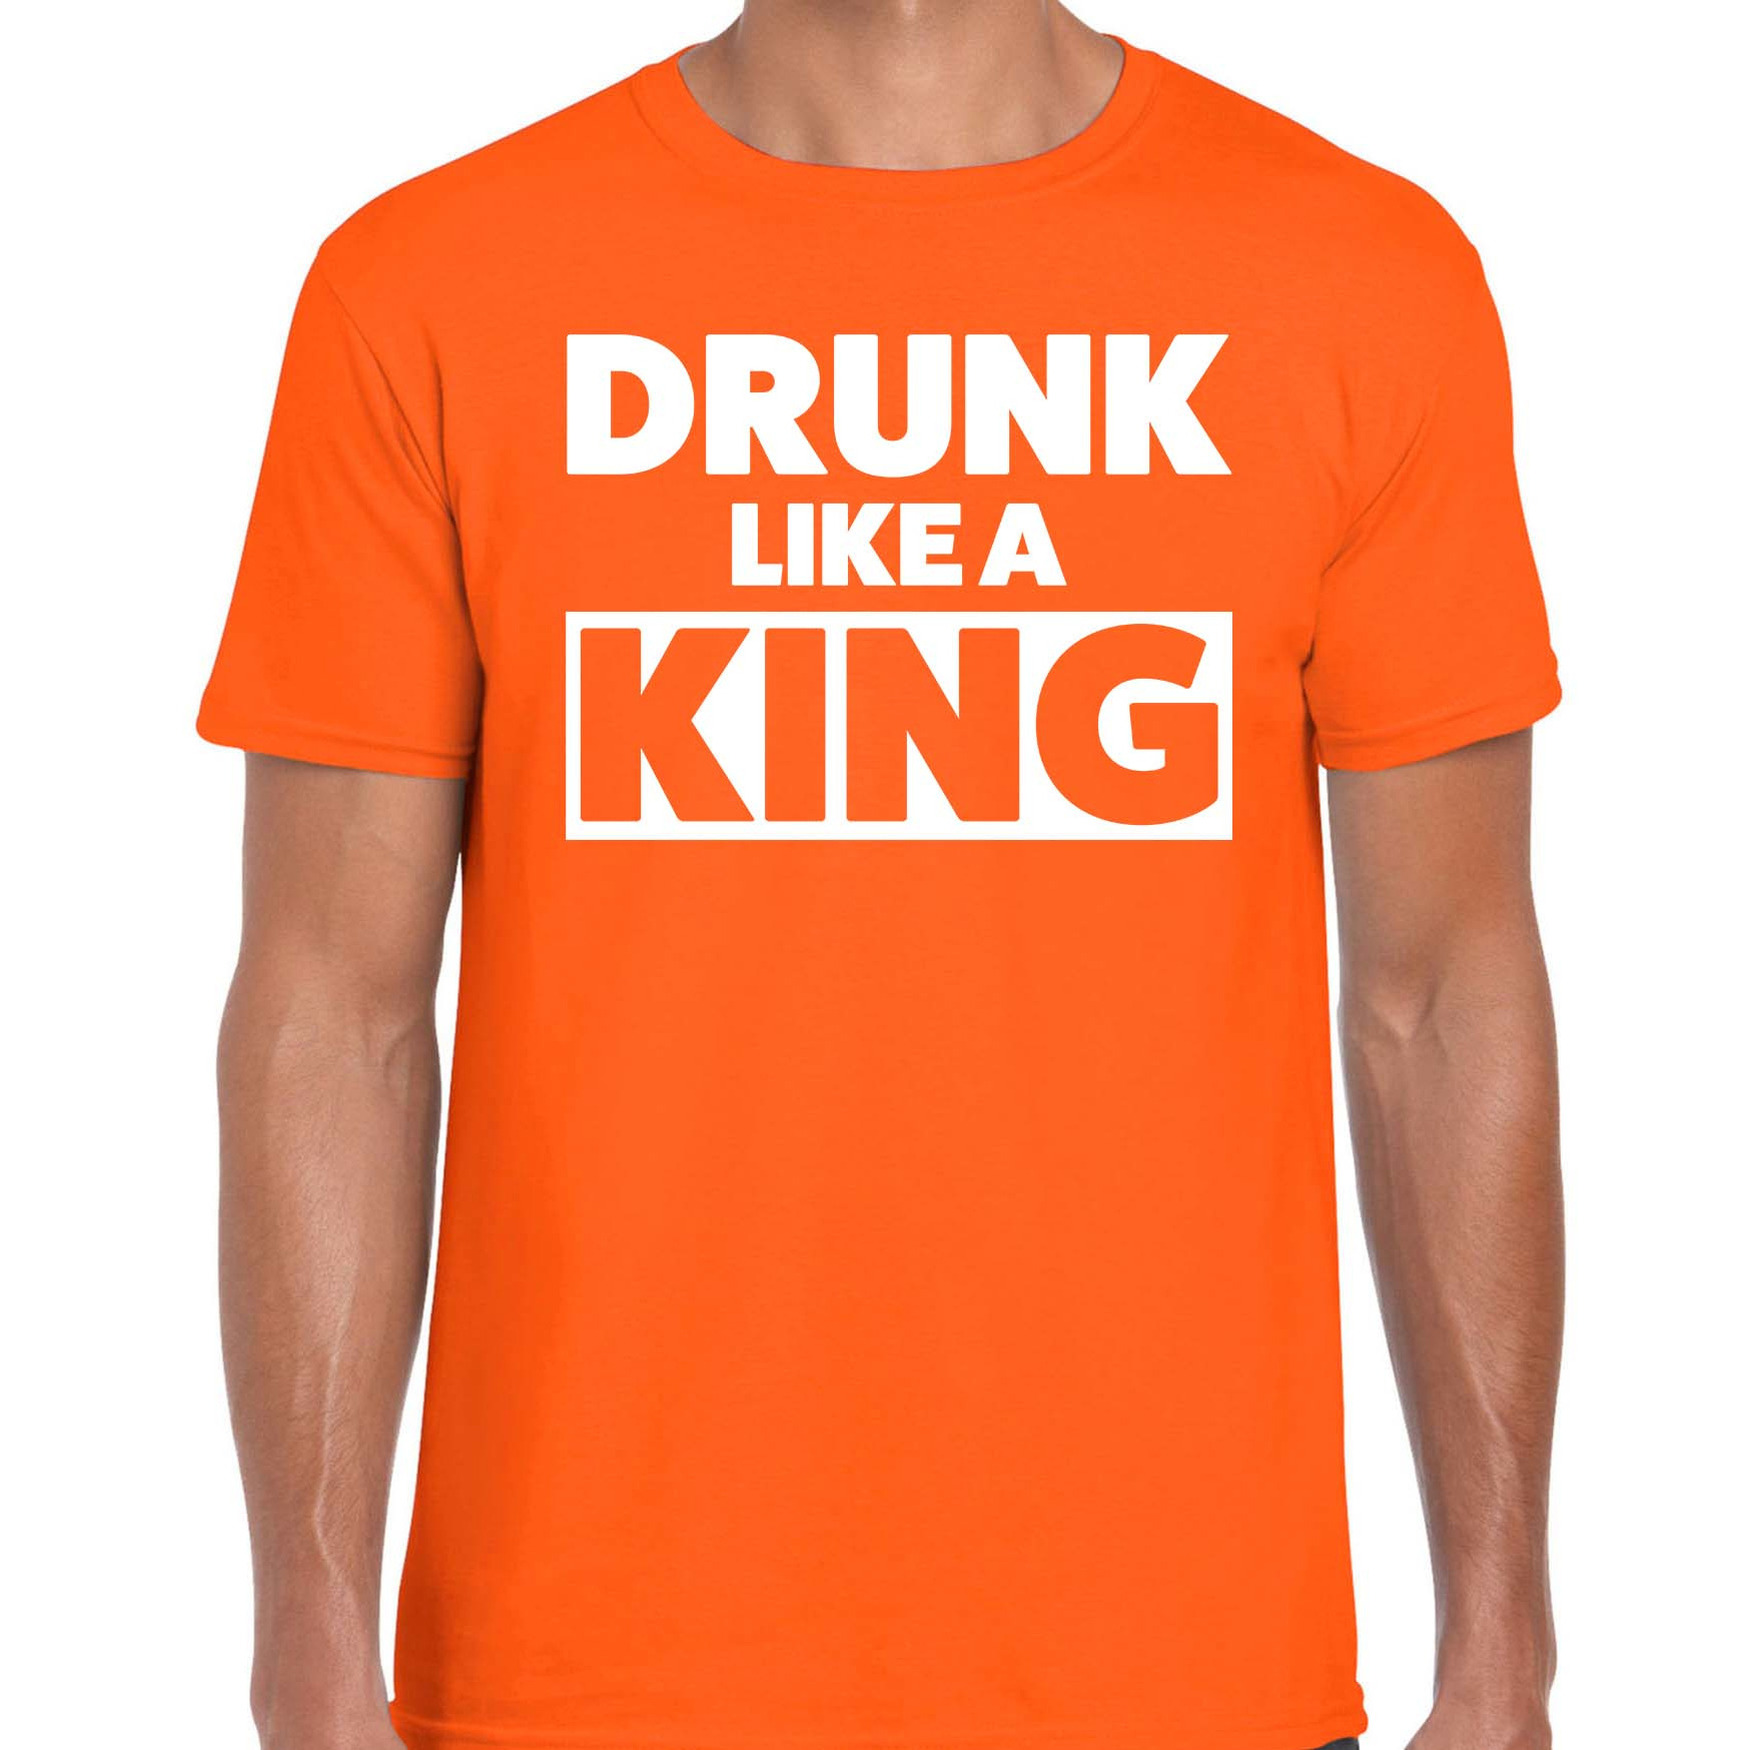 Drunk like a King t-shirt oranje voor heren Koningsdag shirts